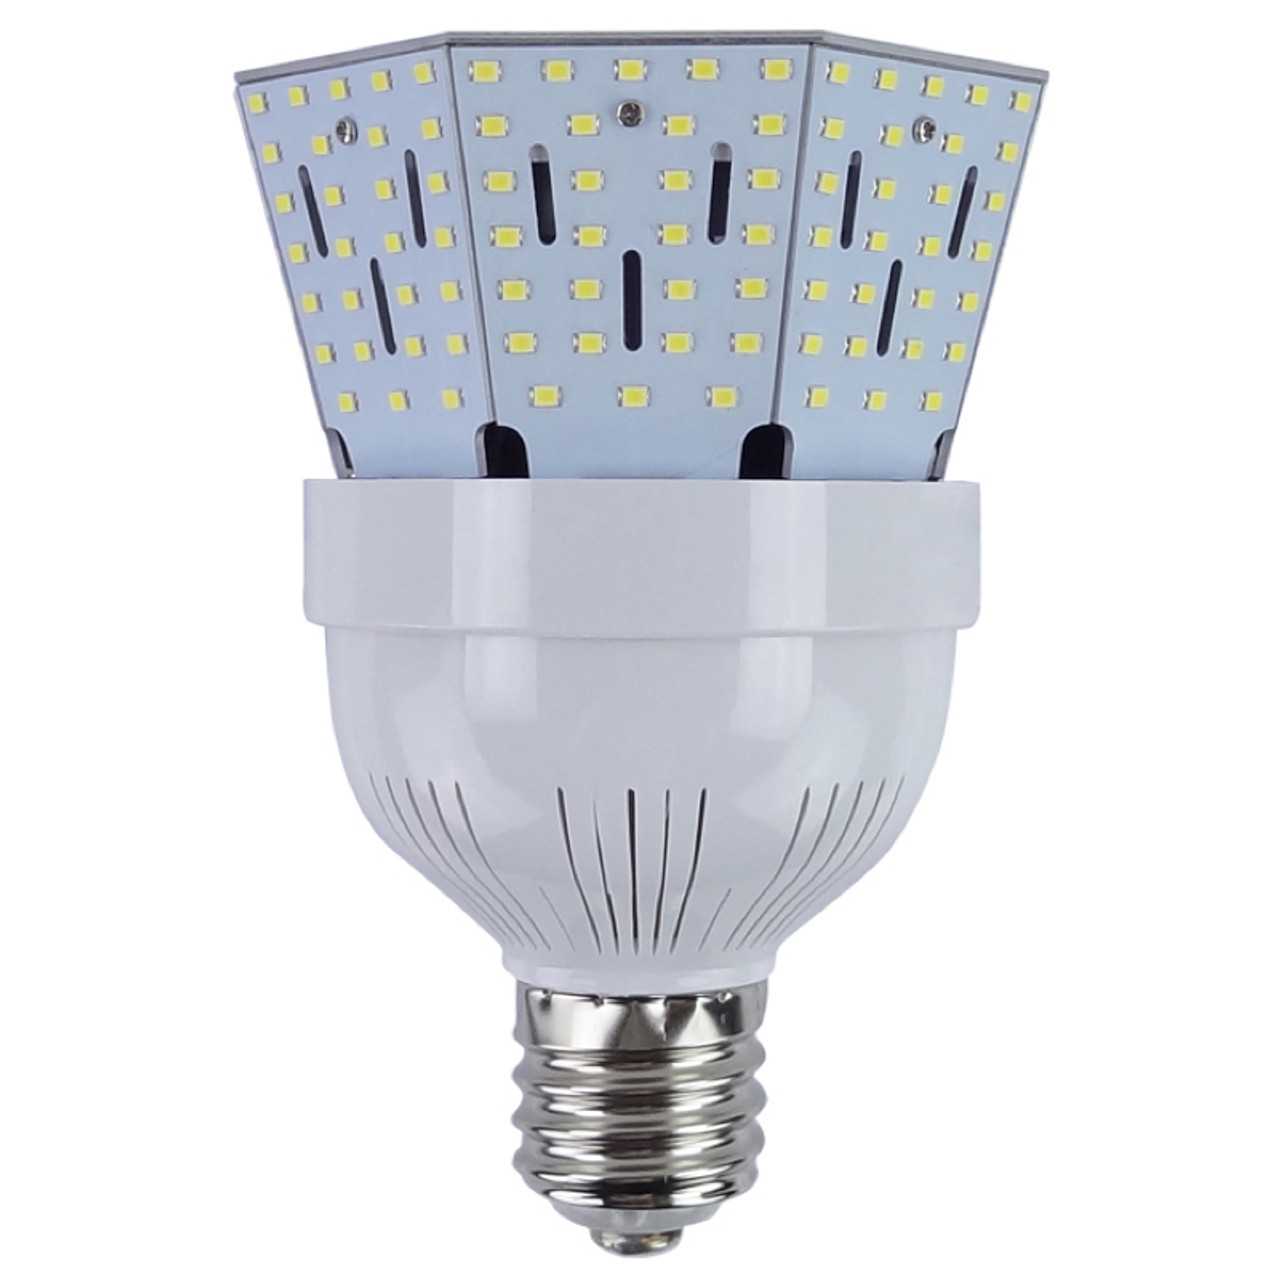 Doorbraak NieuwZeeland zebra 150 Watt LED Pole Light Retrofit Bulb | 150 Watt LED Replacement Bulb